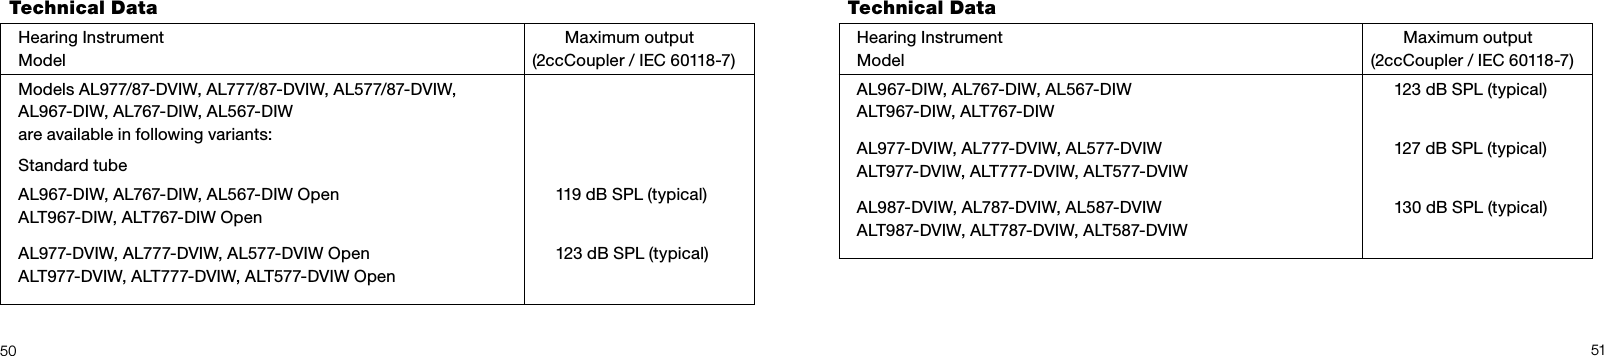 5051Technical DataHearing Instrument Model       Maximum output(2ccCoupler / IEC 60118-7)Models AL977/87-DVIW, AL777/87-DVIW, AL577/87-DVIW, AL967-DIW, AL767-DIW, AL567-DIW are available in following variants:Standard tubeAL967-DIW, AL767-DIW, AL567-DIW Open ALT967-DIW, ALT767-DIW Open     119 dB SPL (typical)AL977-DVIW, AL777-DVIW, AL577-DVIW Open ALT977-DVIW, ALT777-DVIW, ALT577-DVIW Open     123 dB SPL (typical)Technical DataHearing Instrument Model       Maximum output(2ccCoupler / IEC 60118-7)AL967-DIW, AL767-DIW, AL567-DIW ALT967-DIW, ALT767-DIW     123 dB SPL (typical)AL977-DVIW, AL777-DVIW, AL577-DVIW ALT977-DVIW, ALT777-DVIW, ALT577-DVIW      127 dB SPL (typical)AL987-DVIW, AL787-DVIW, AL587-DVIW ALT987-DVIW, ALT787-DVIW, ALT587-DVIW      130 dB SPL (typical)